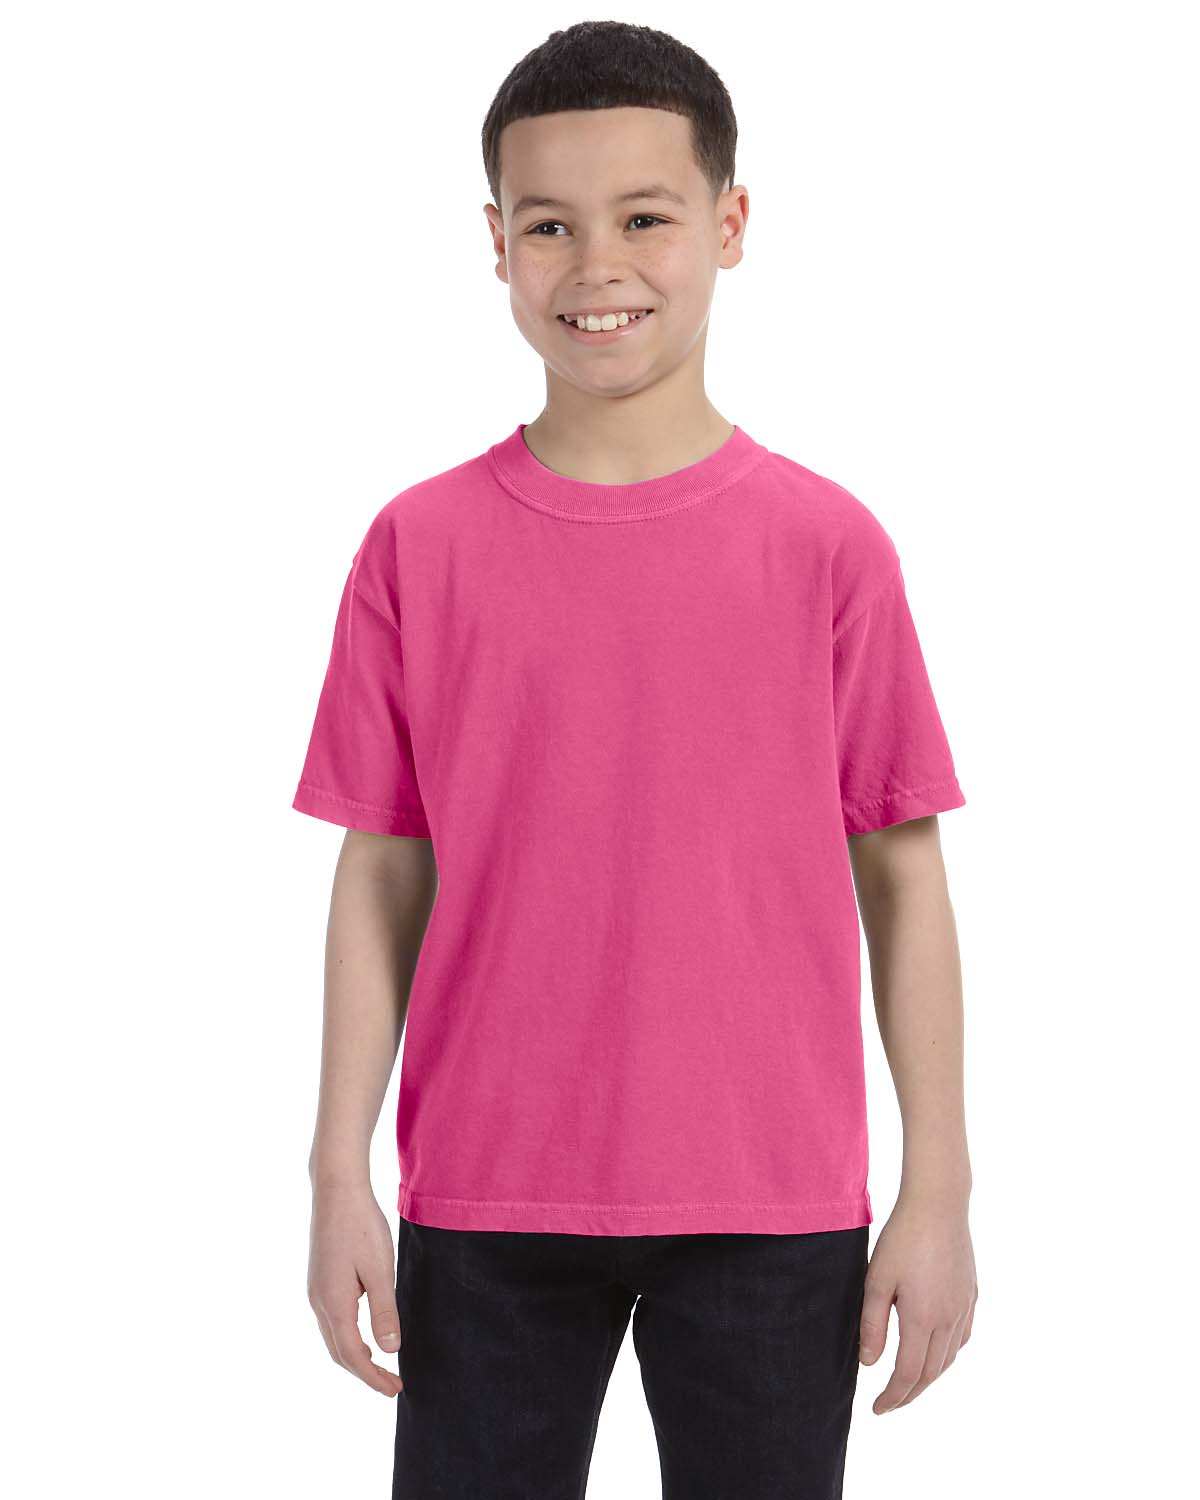 Boy wearing pink Comfort Colors tee